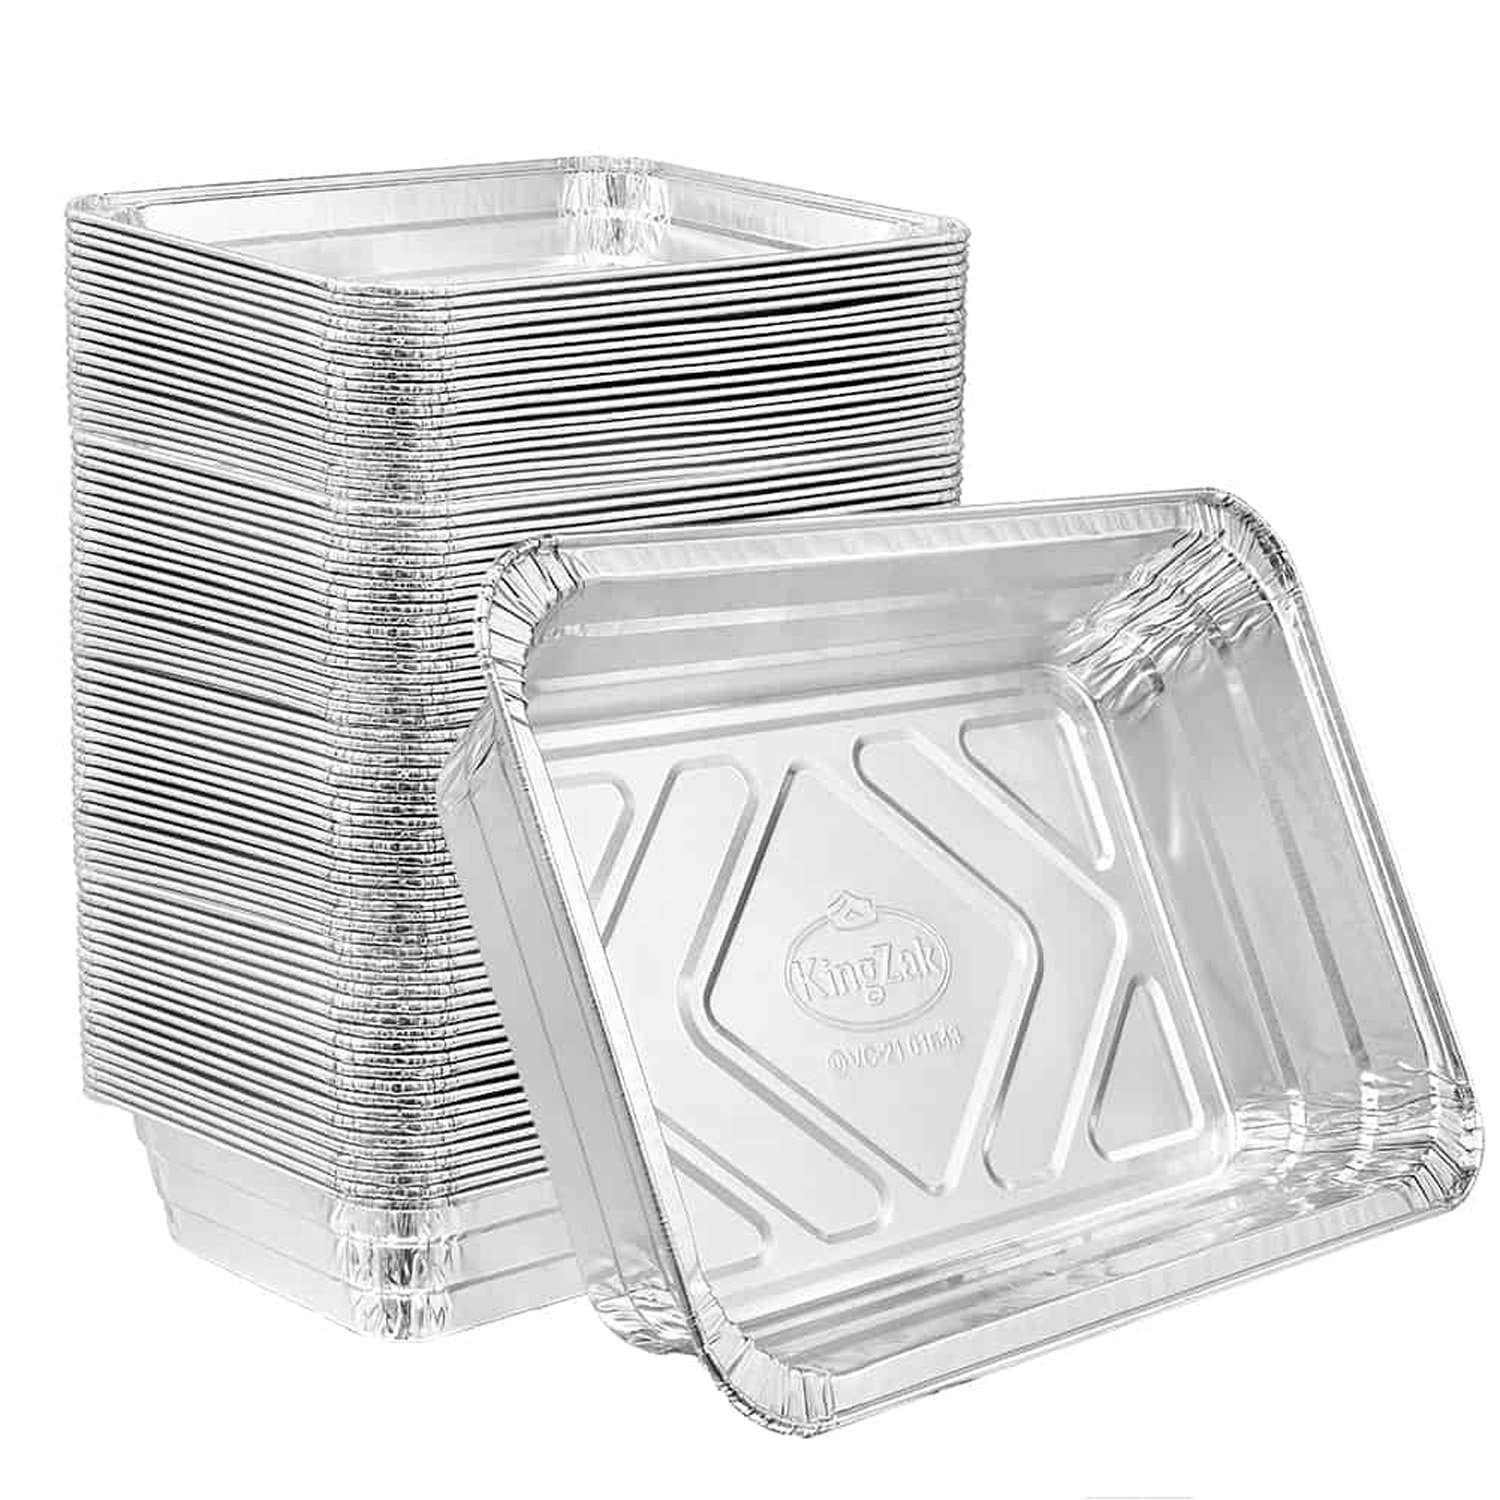 Disposable Aluminum 8 Square Cake Baking Pan (Set of 100) Nicole Fantini